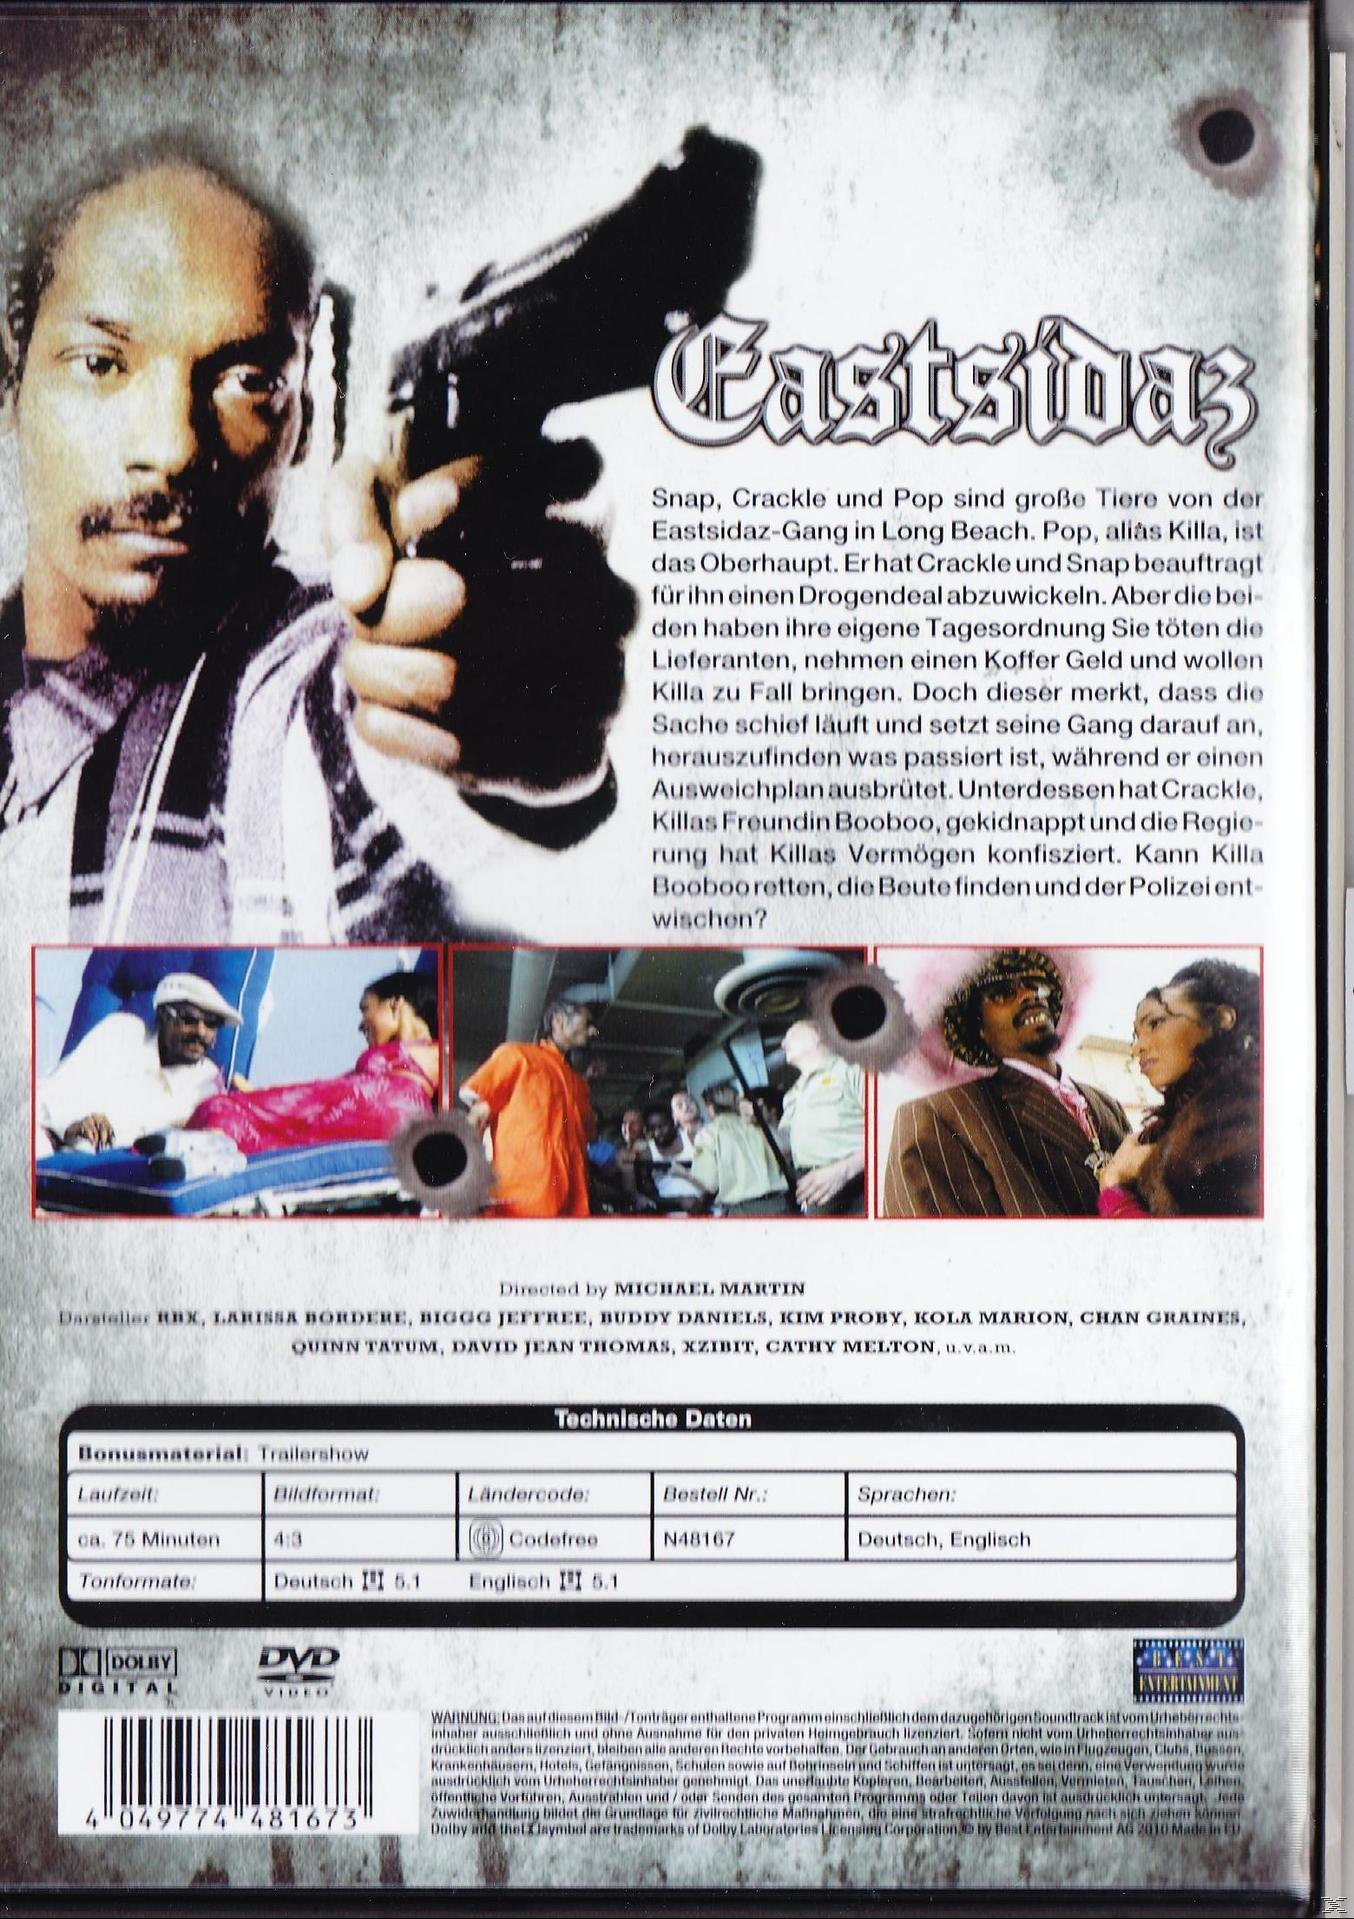 Dogg: Snoop Eastsidaz DVD